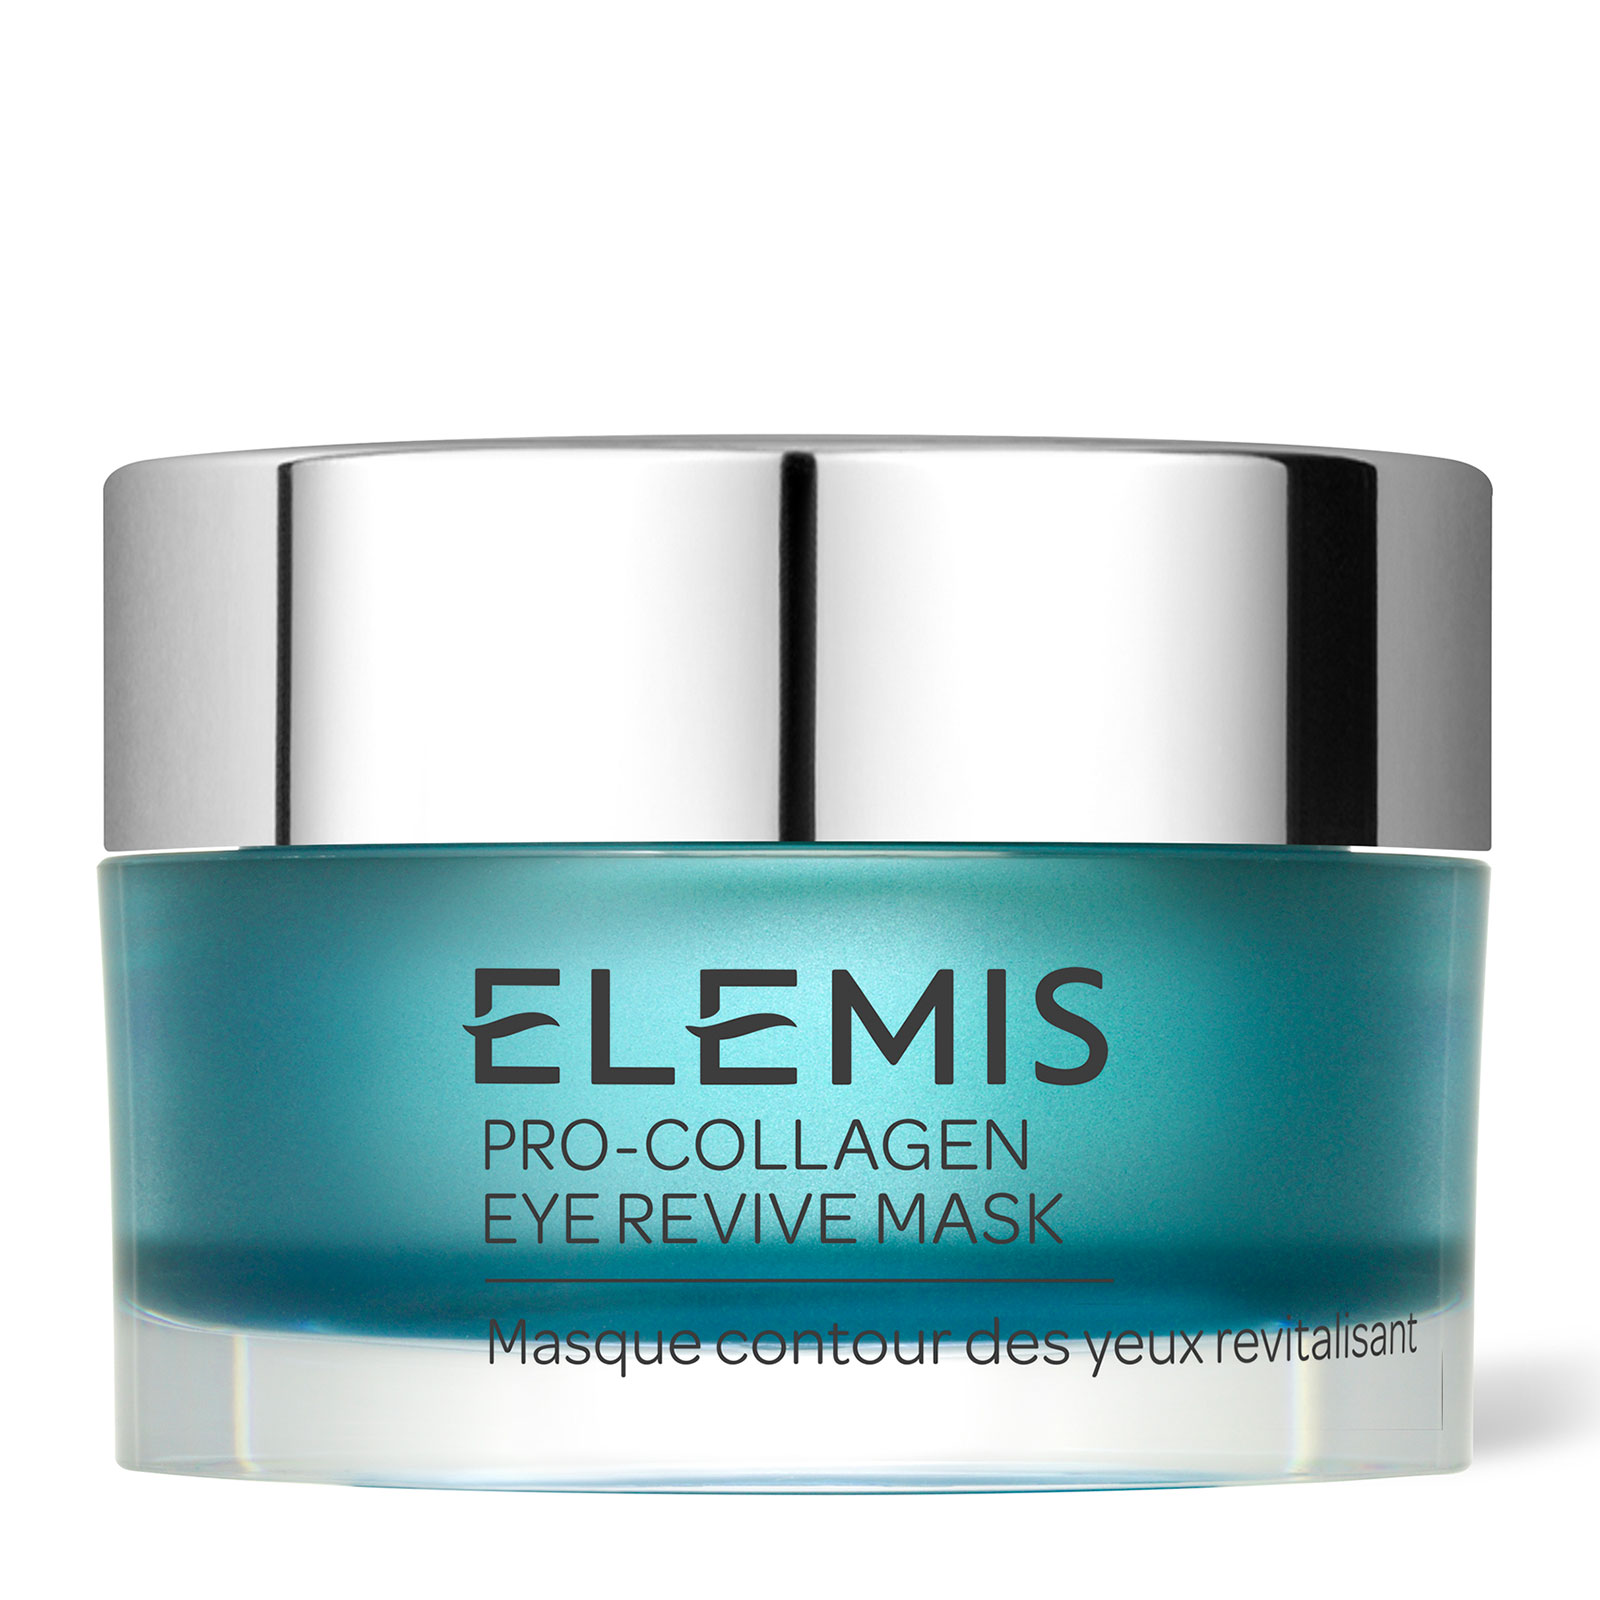 ELEMIS Pro-Collagen Eye Revive Mask Supersize 30ml